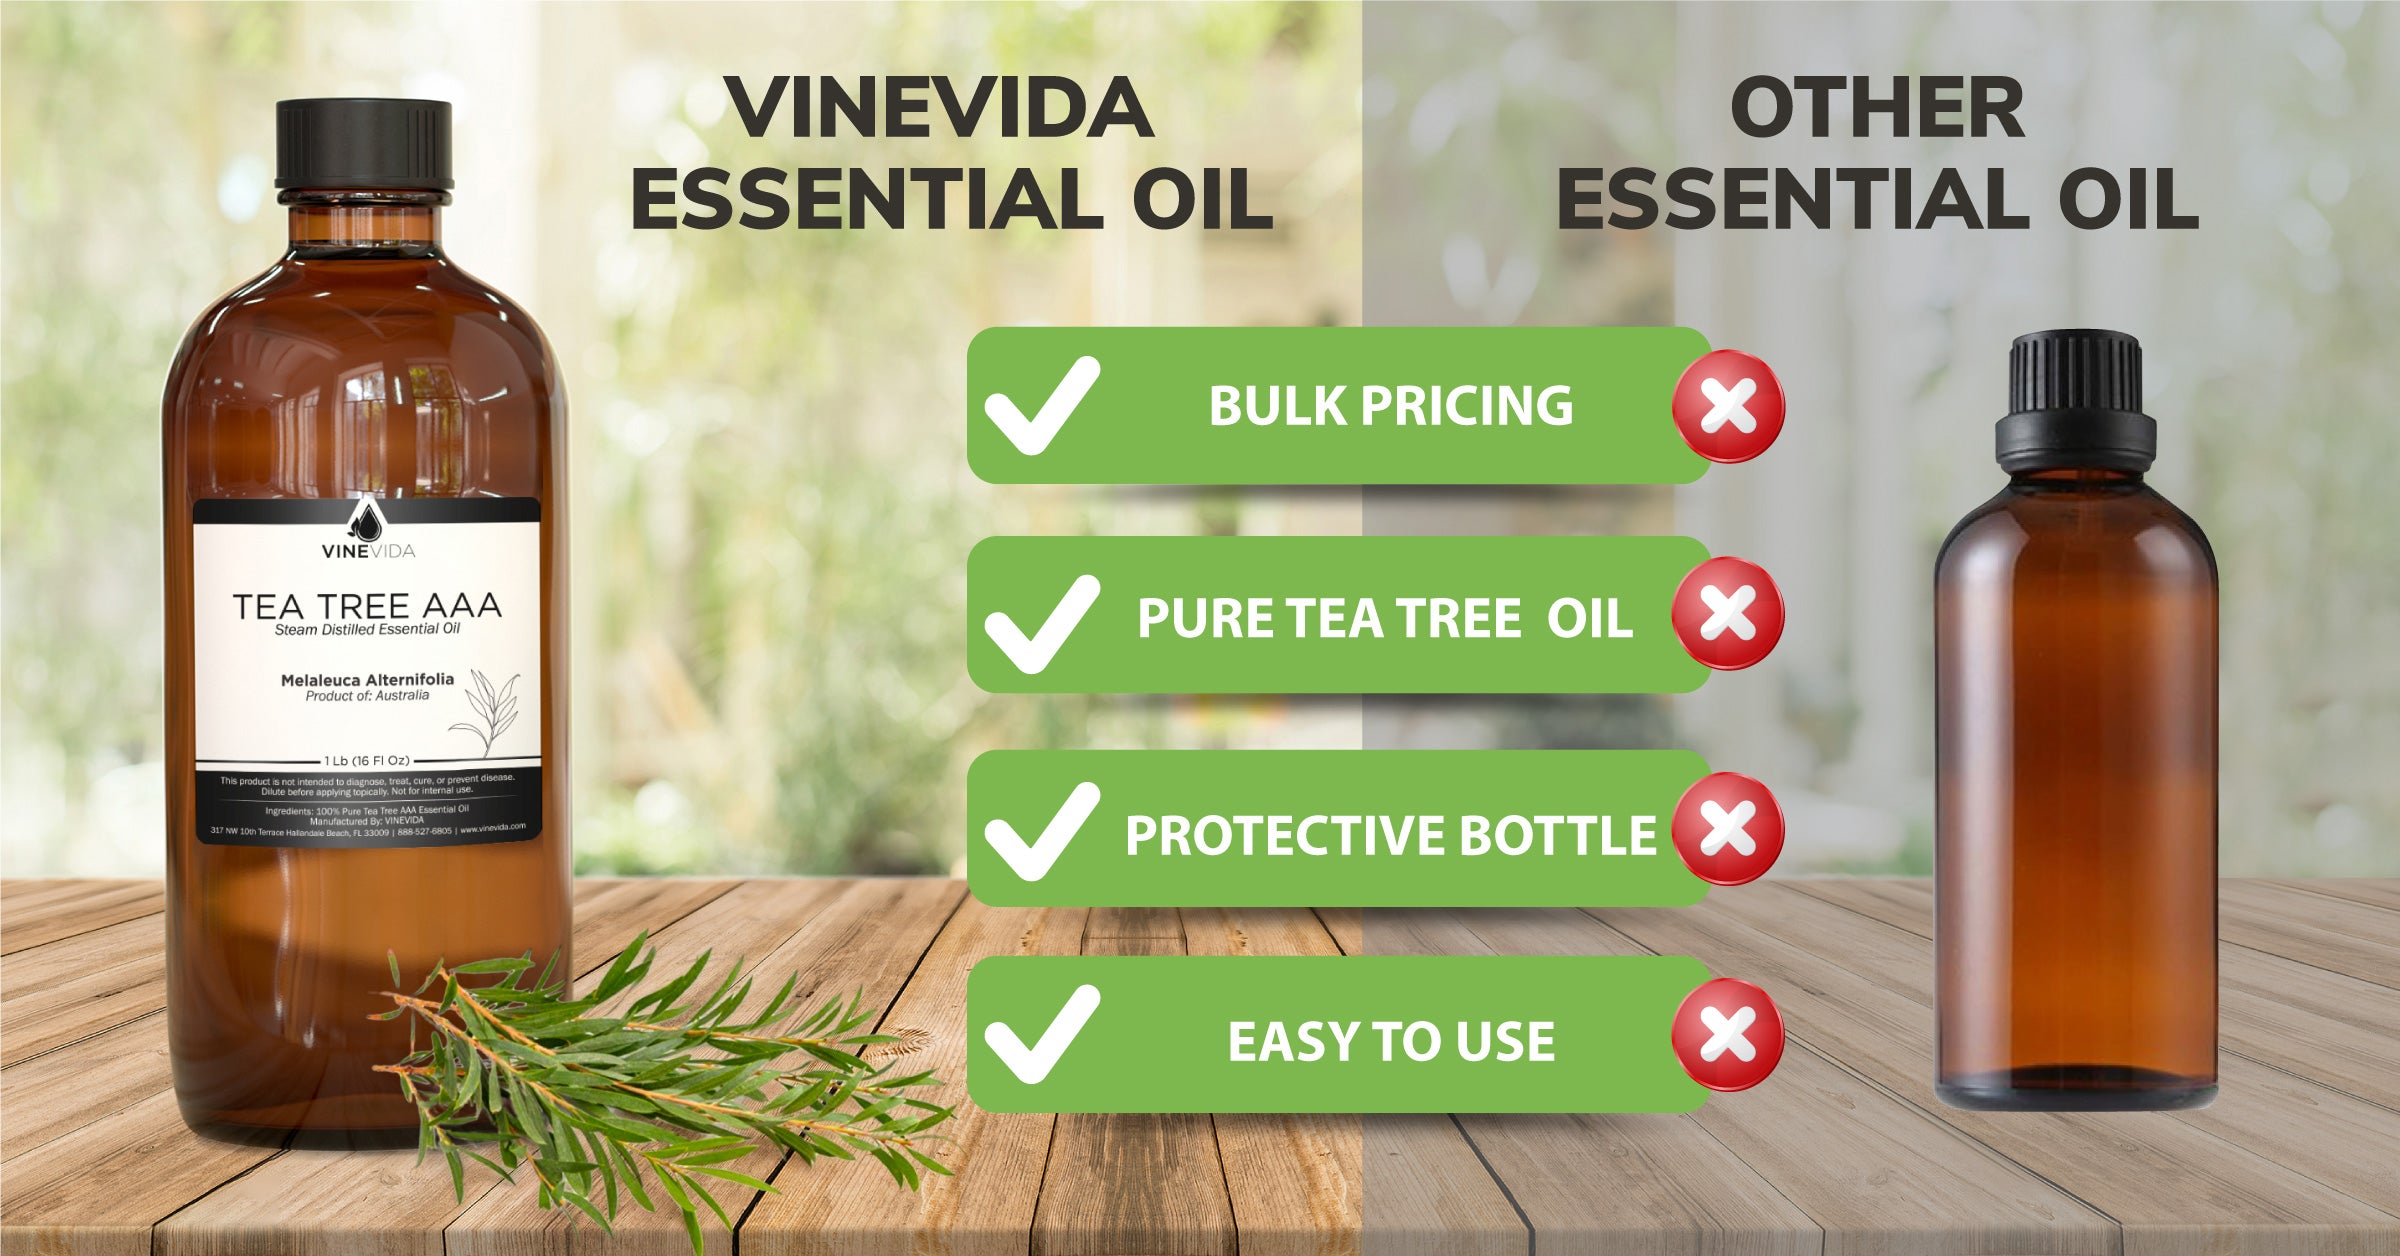 Tea Tree Essential Oil Benefits – 100% PURE